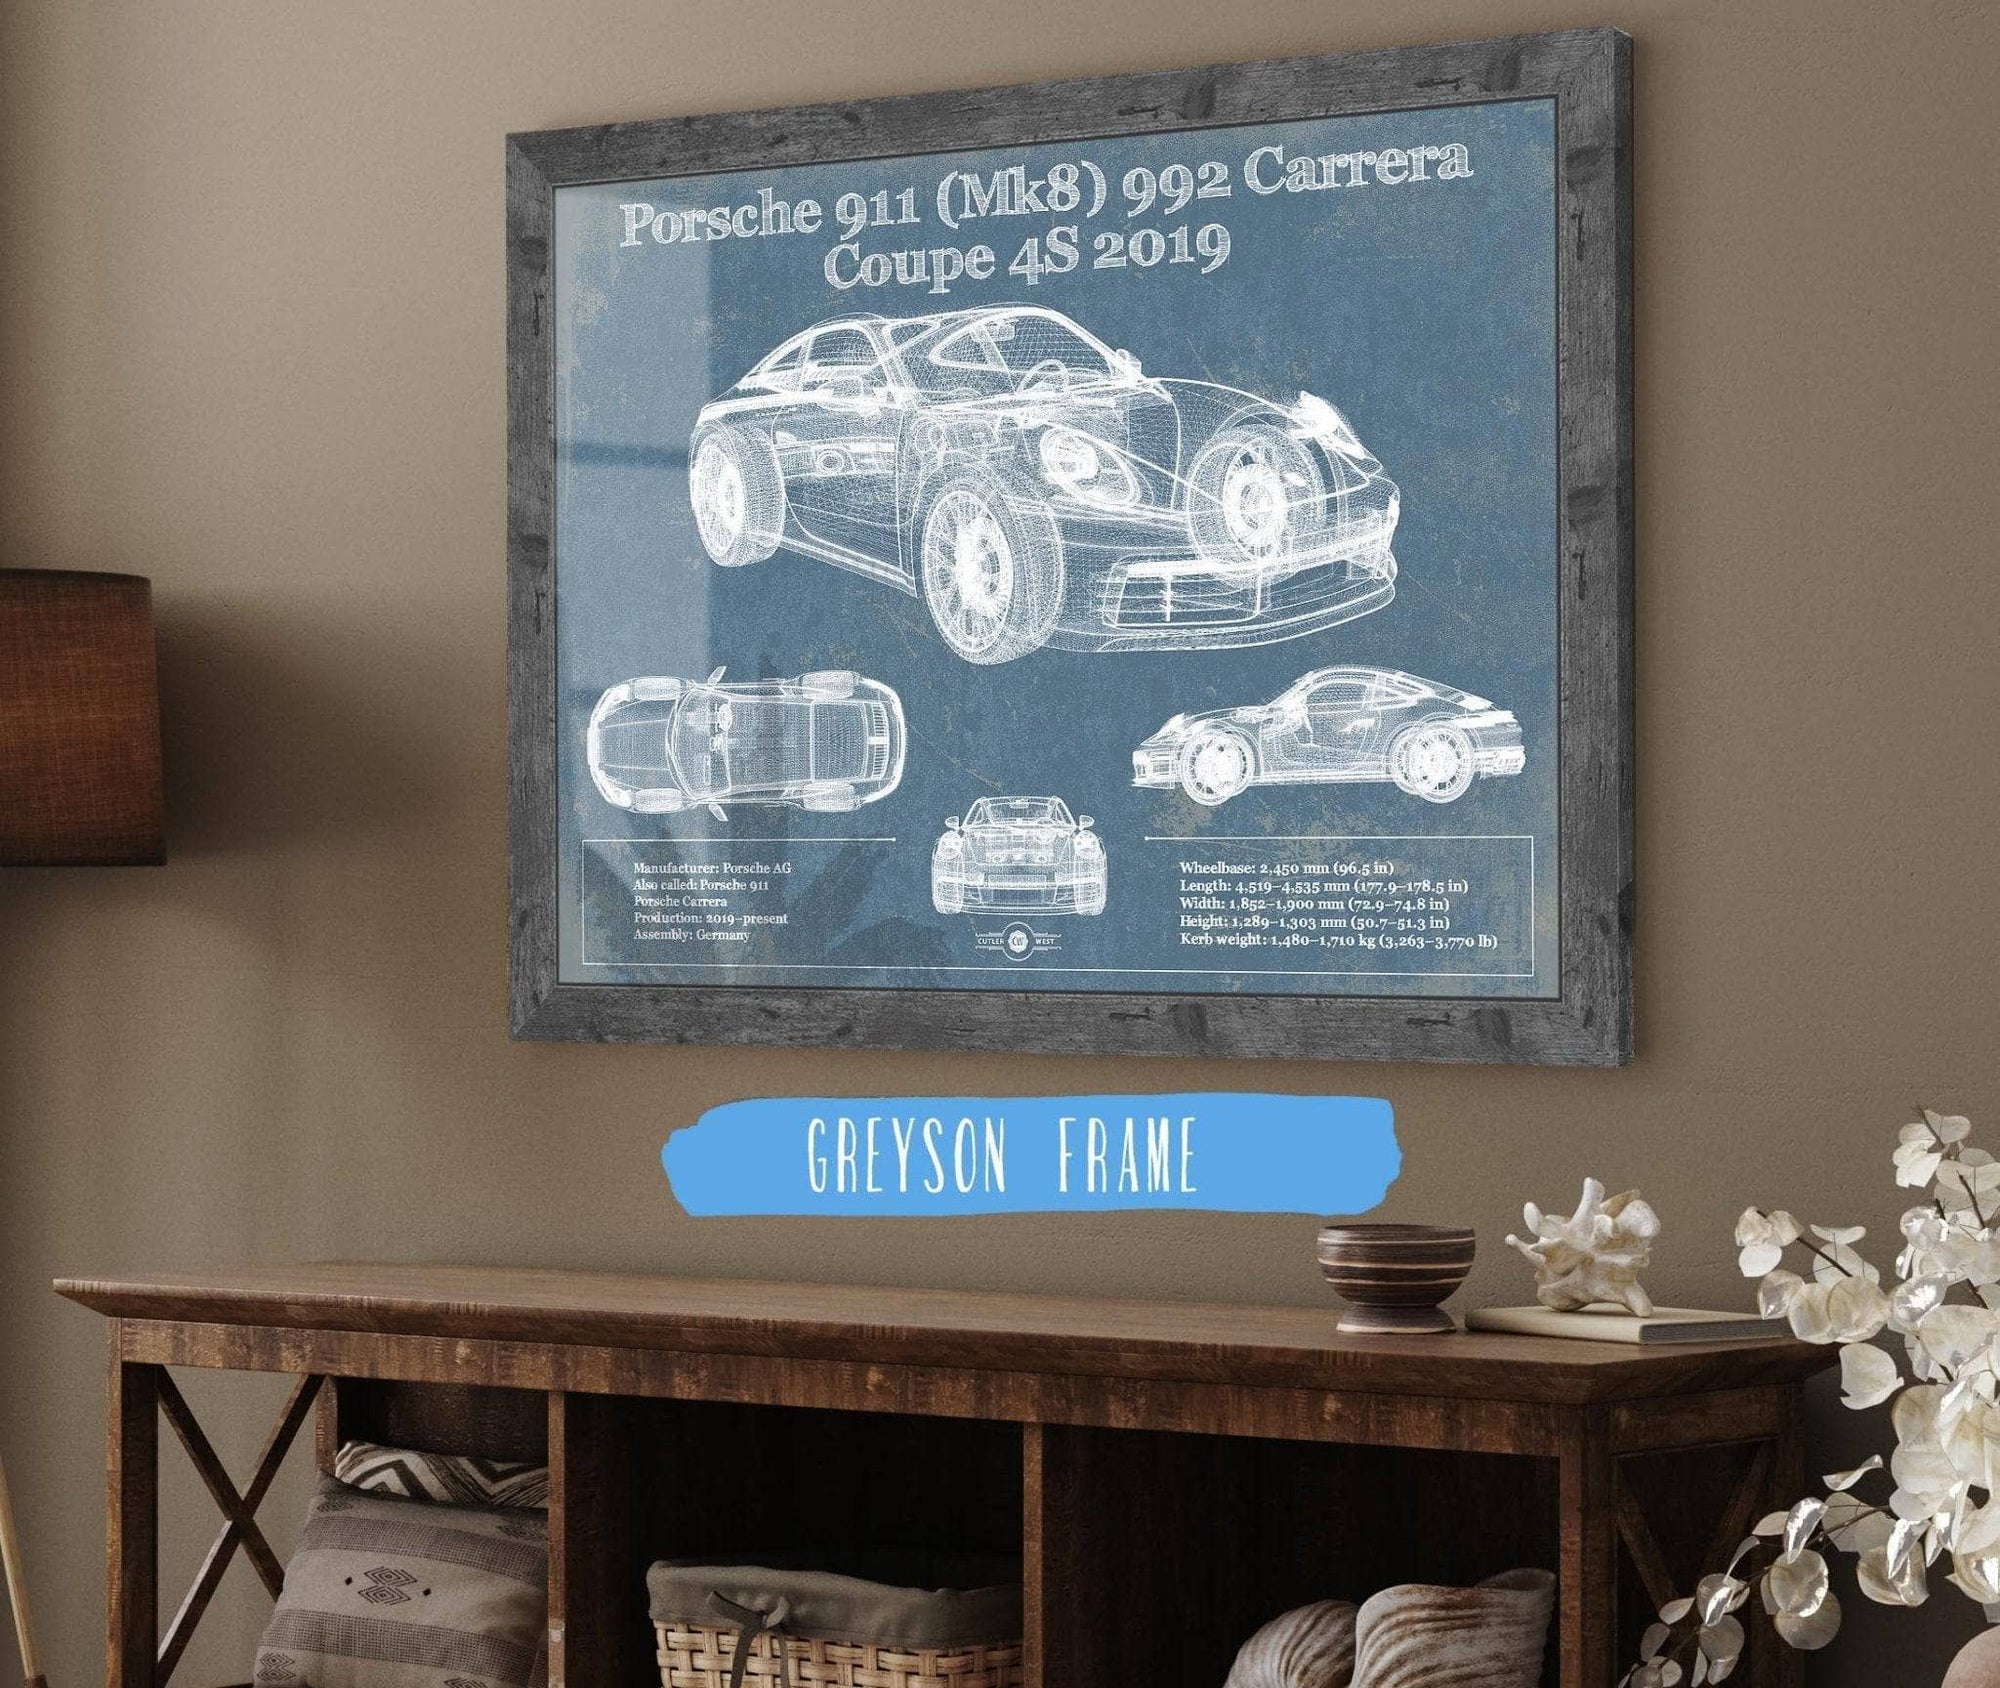 Cutler West Porsche Collection 24" x 18" / Greyson Frame Porsche 911 Mk8 992 Carrera Coupe 4s 2019 Vintage Blueprint Auto Print 845000299_68582